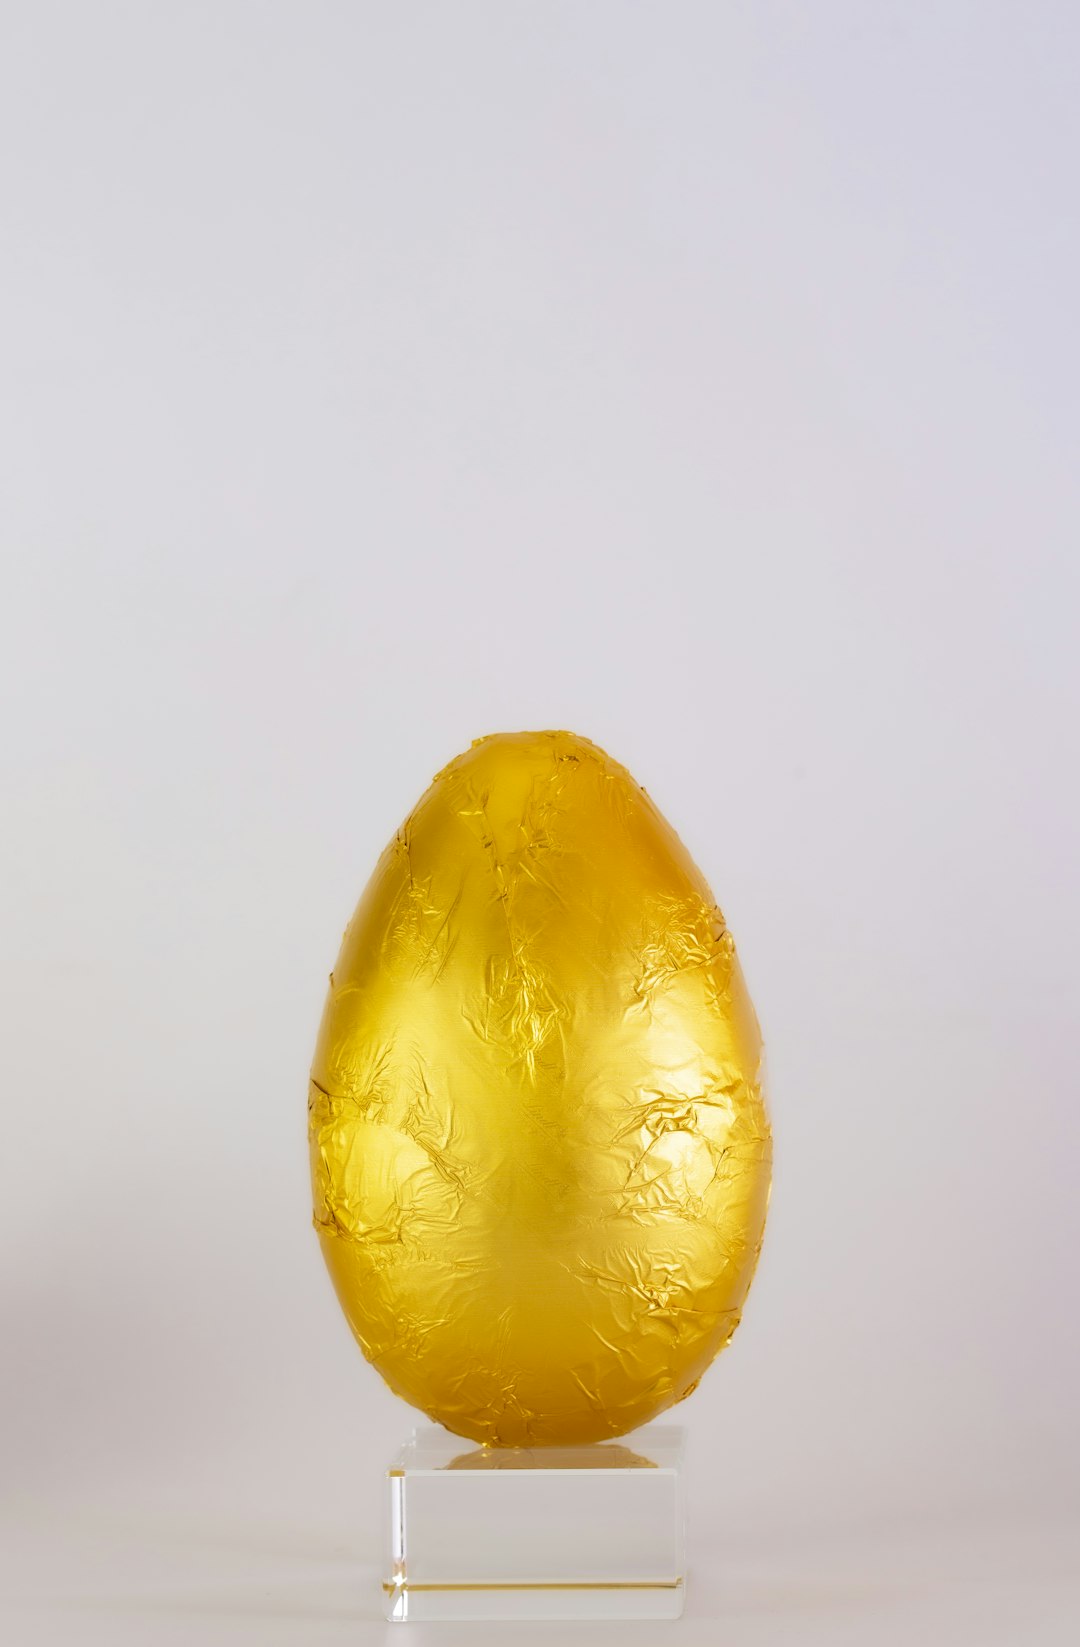 yellow fruit on white surface